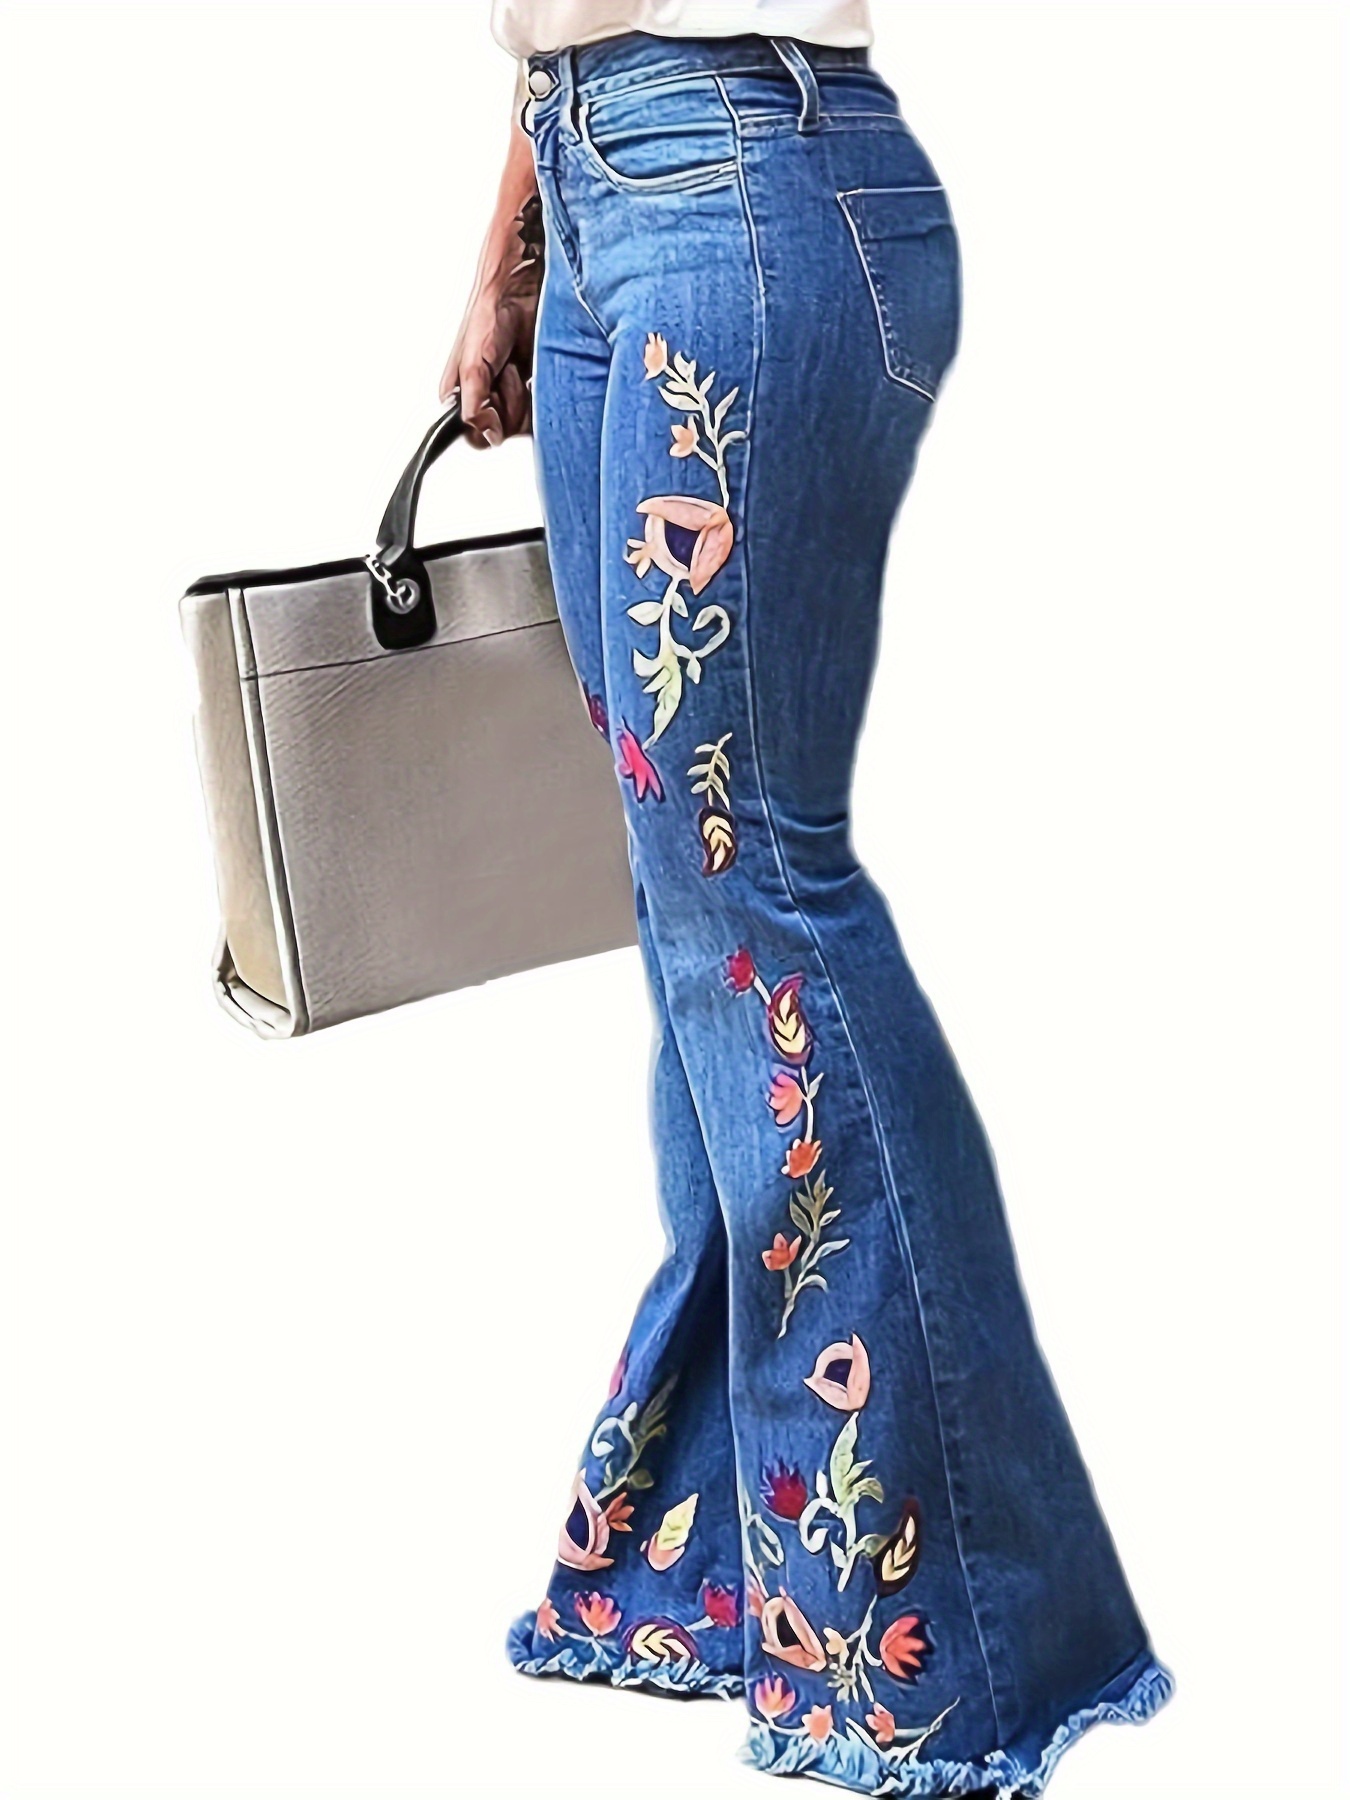 Floral Embroidery Stretchy Flare Leg Jeans, Medium Washed Blue Elegant Bell  Bottoms Denim Pants, Women's Denim Jeans & Clothing